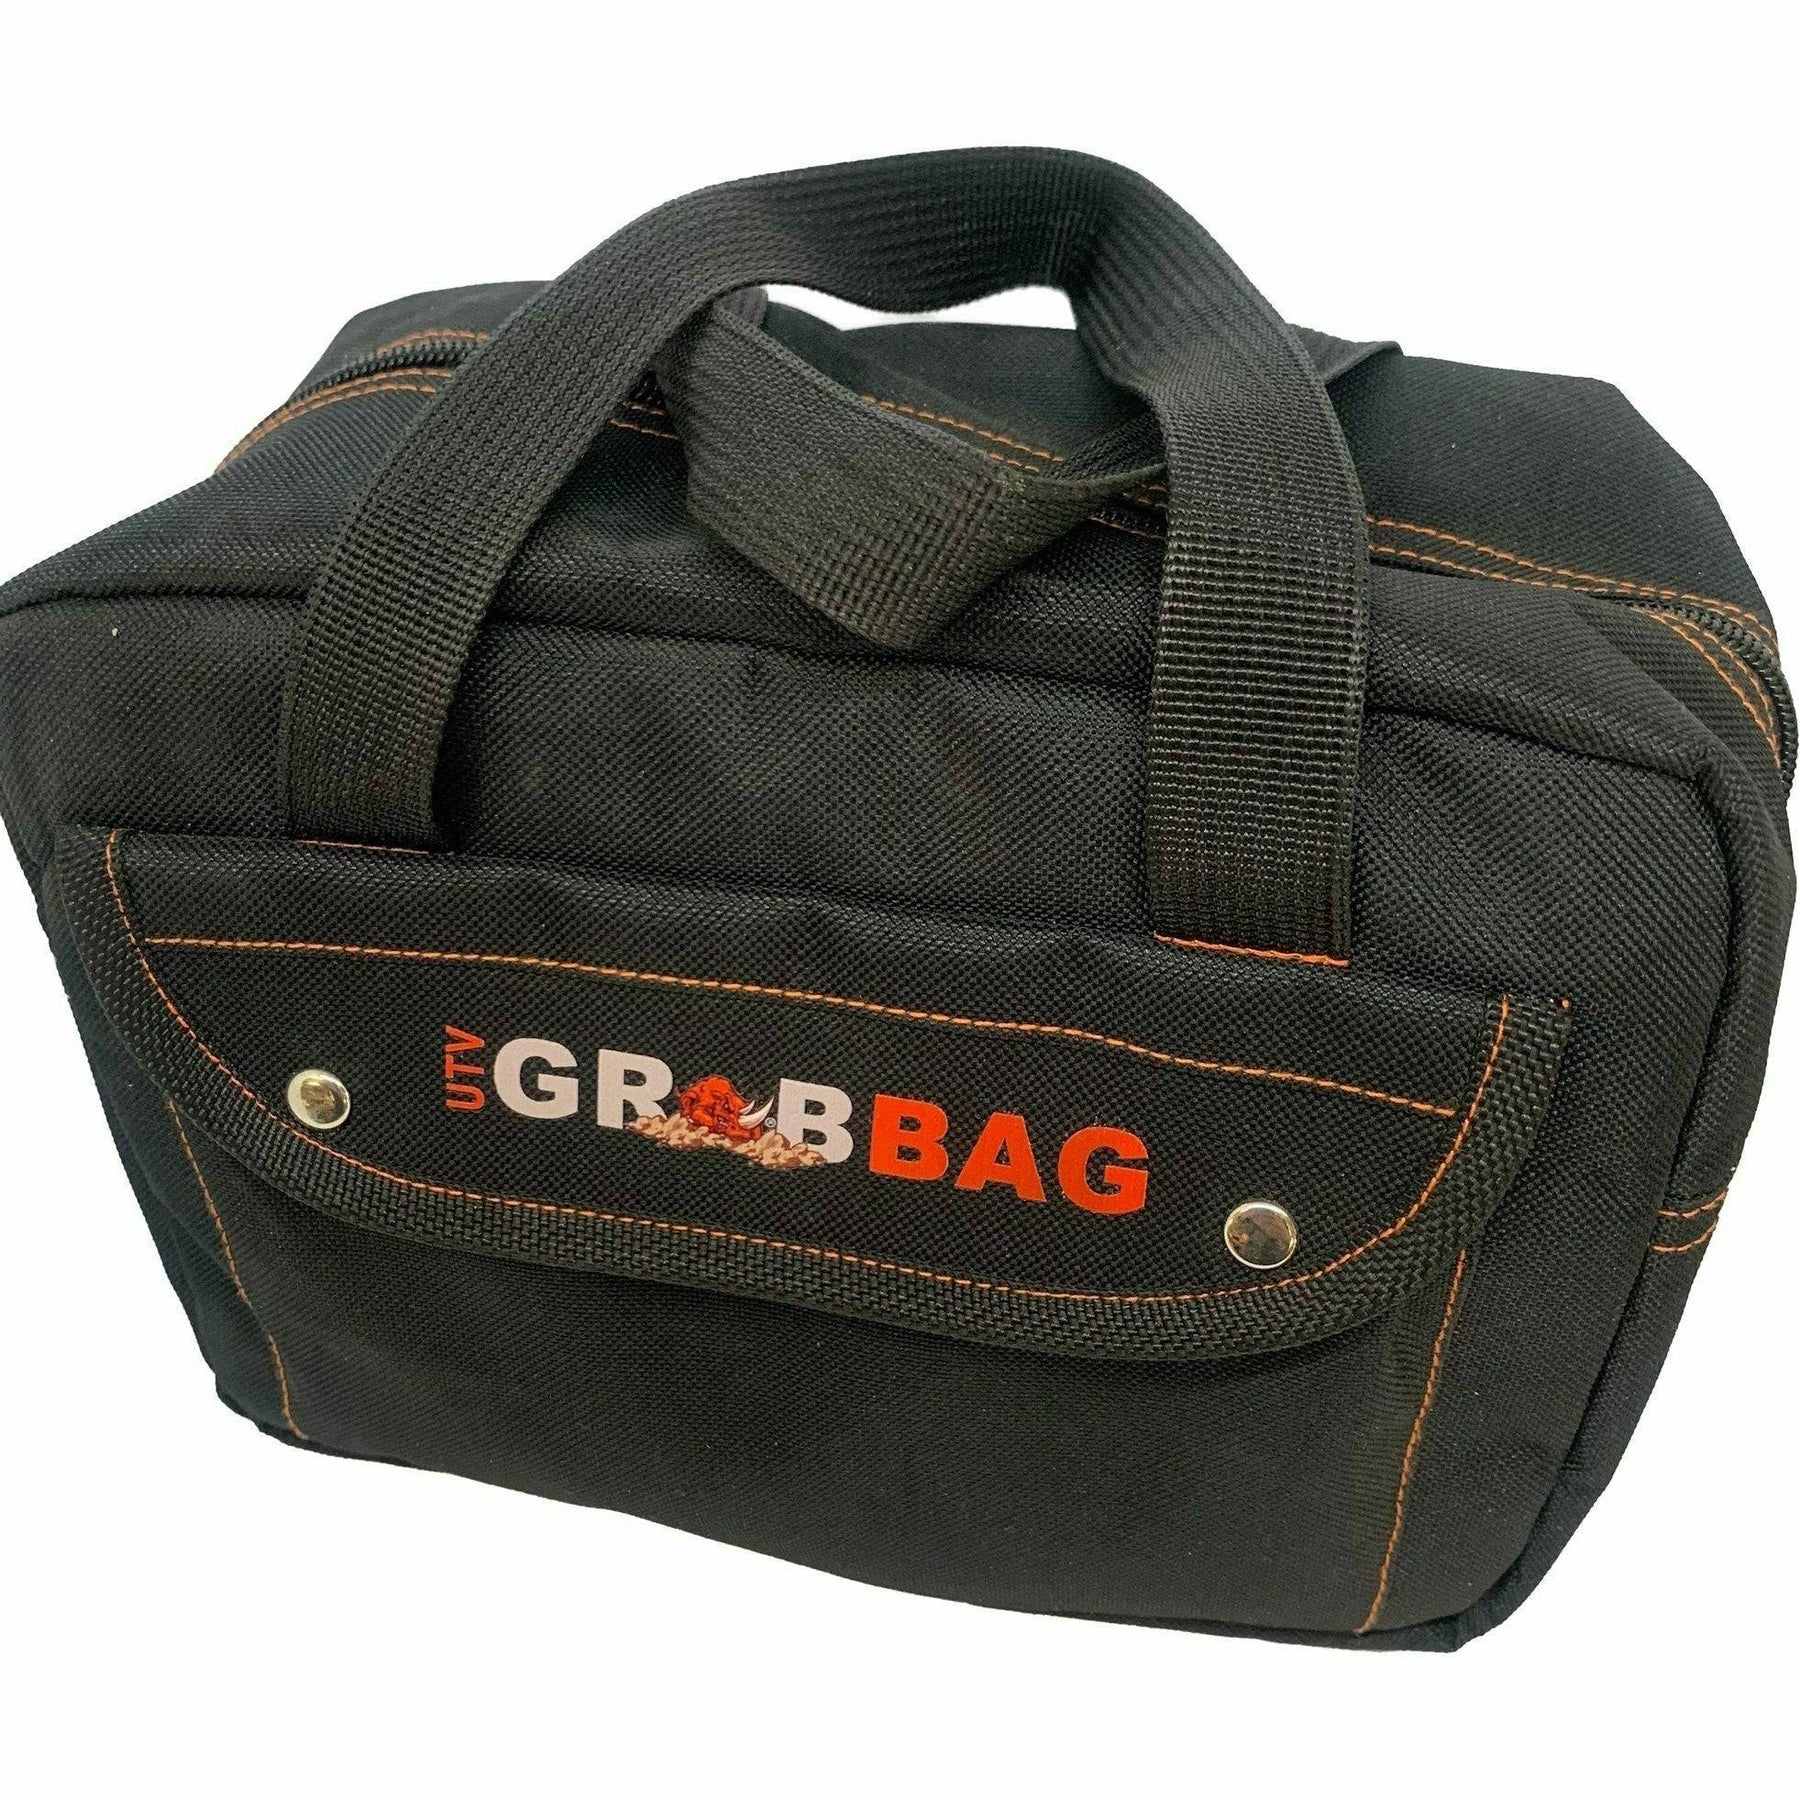 UTV Grab Bag Recovery Kit